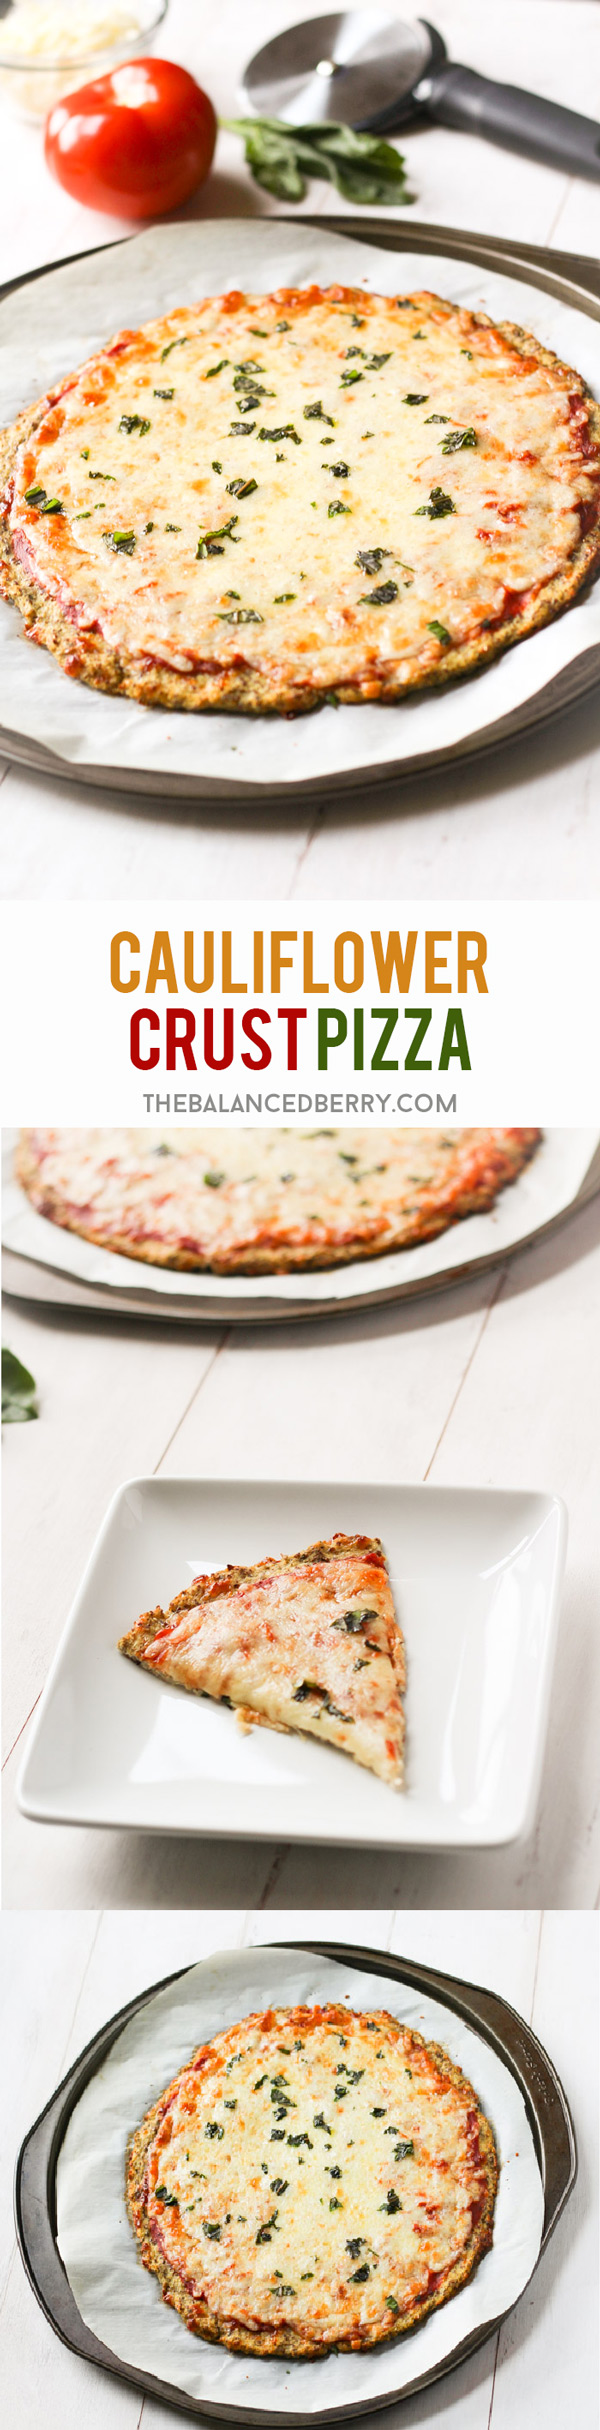 Super-simple cauliflower pizza crust recipe. Gluten and grain free! via thebalancedberry.com